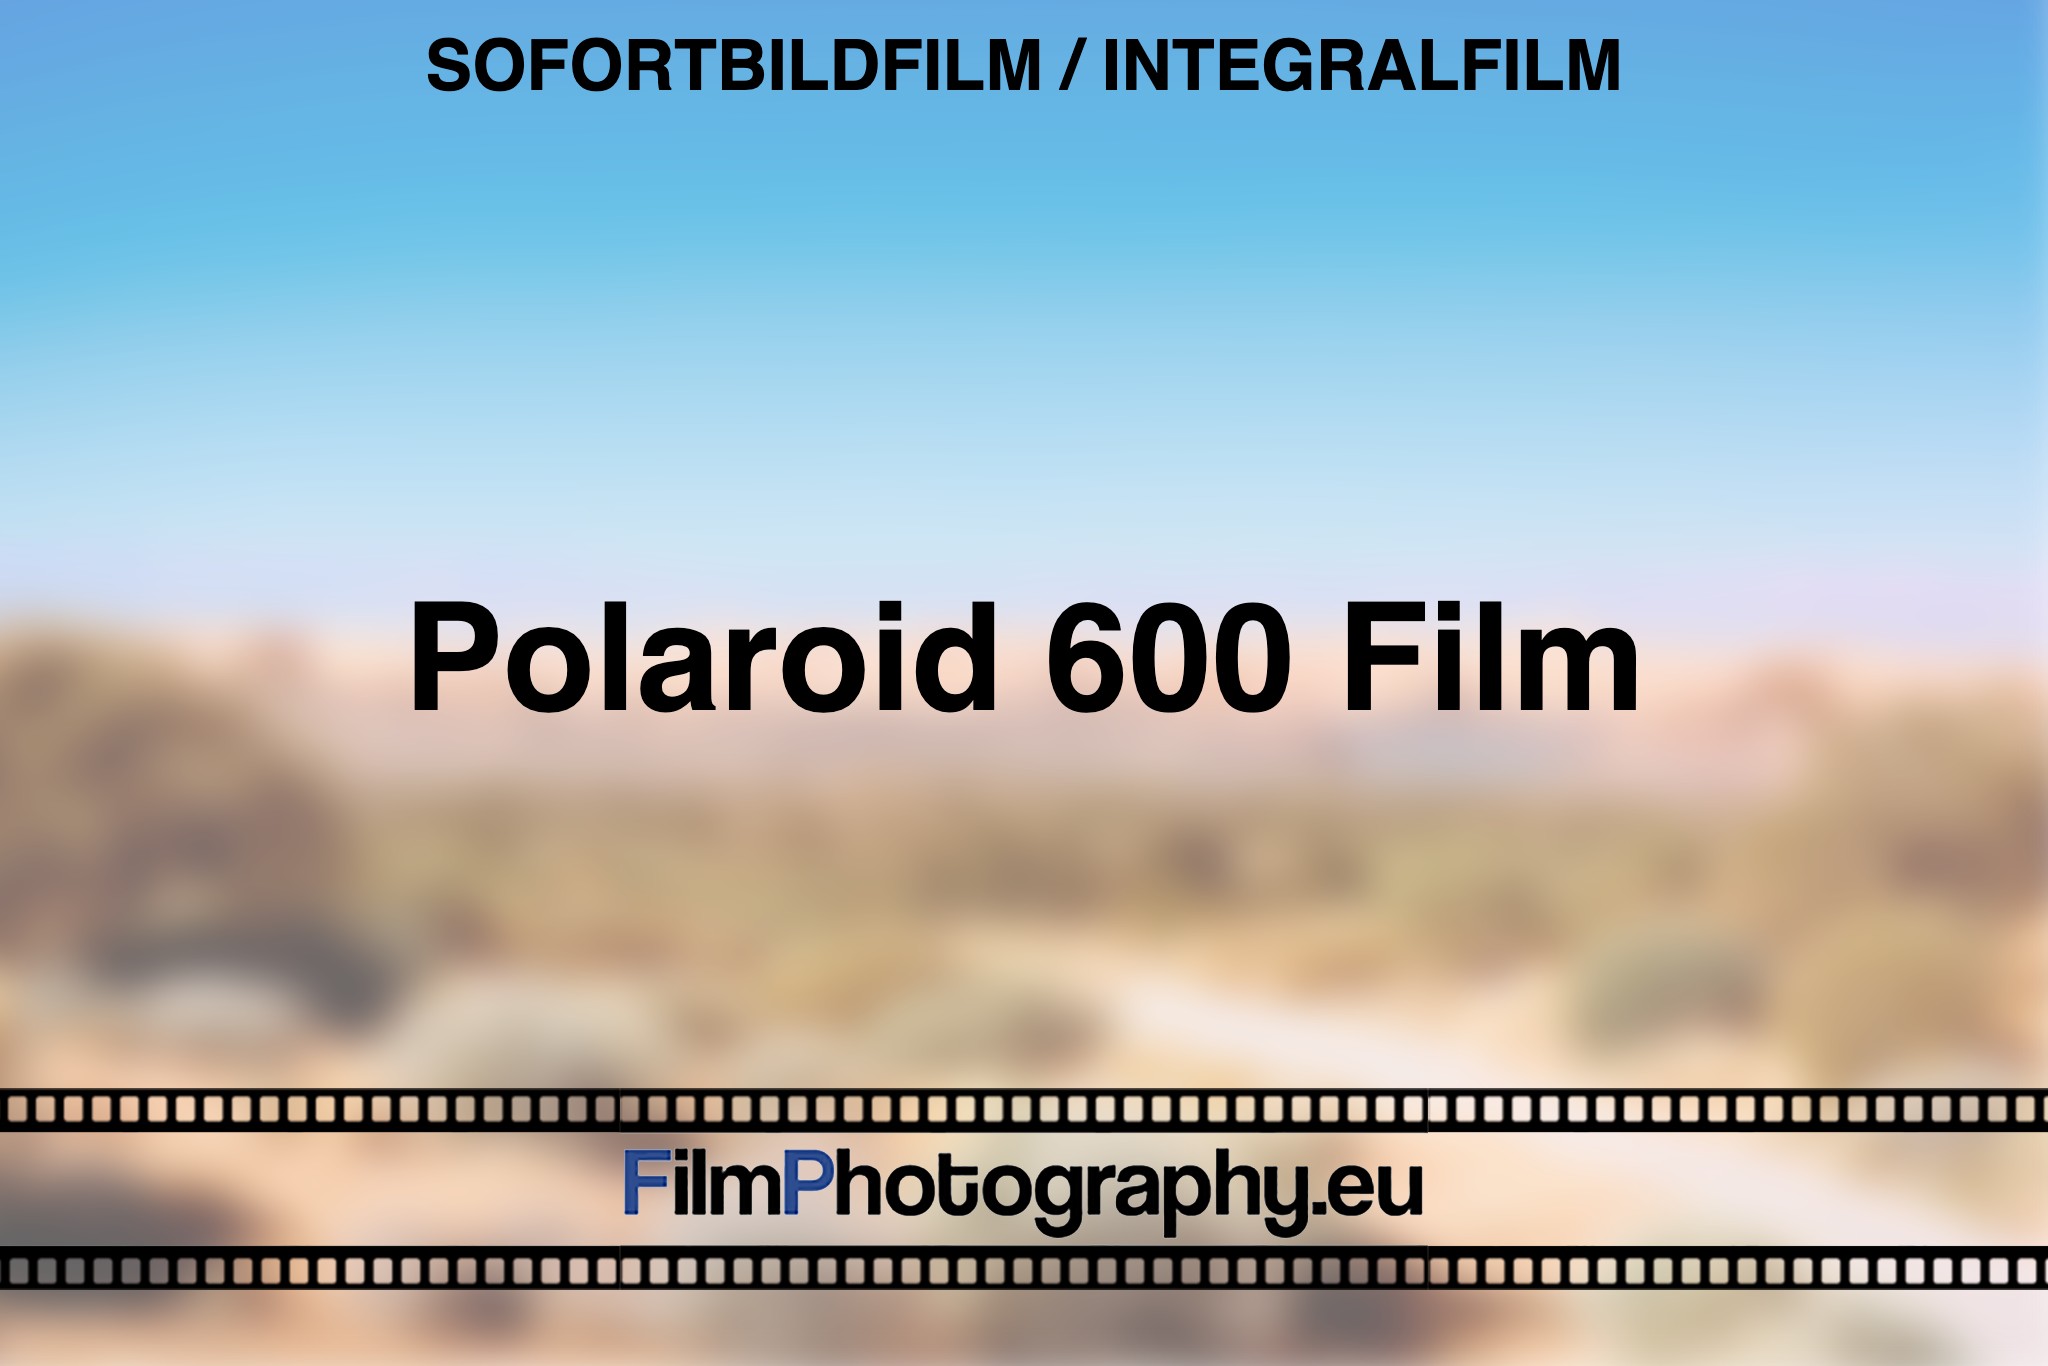 polaroid-600-film-sofortbildfilm-integralfilm-bnv